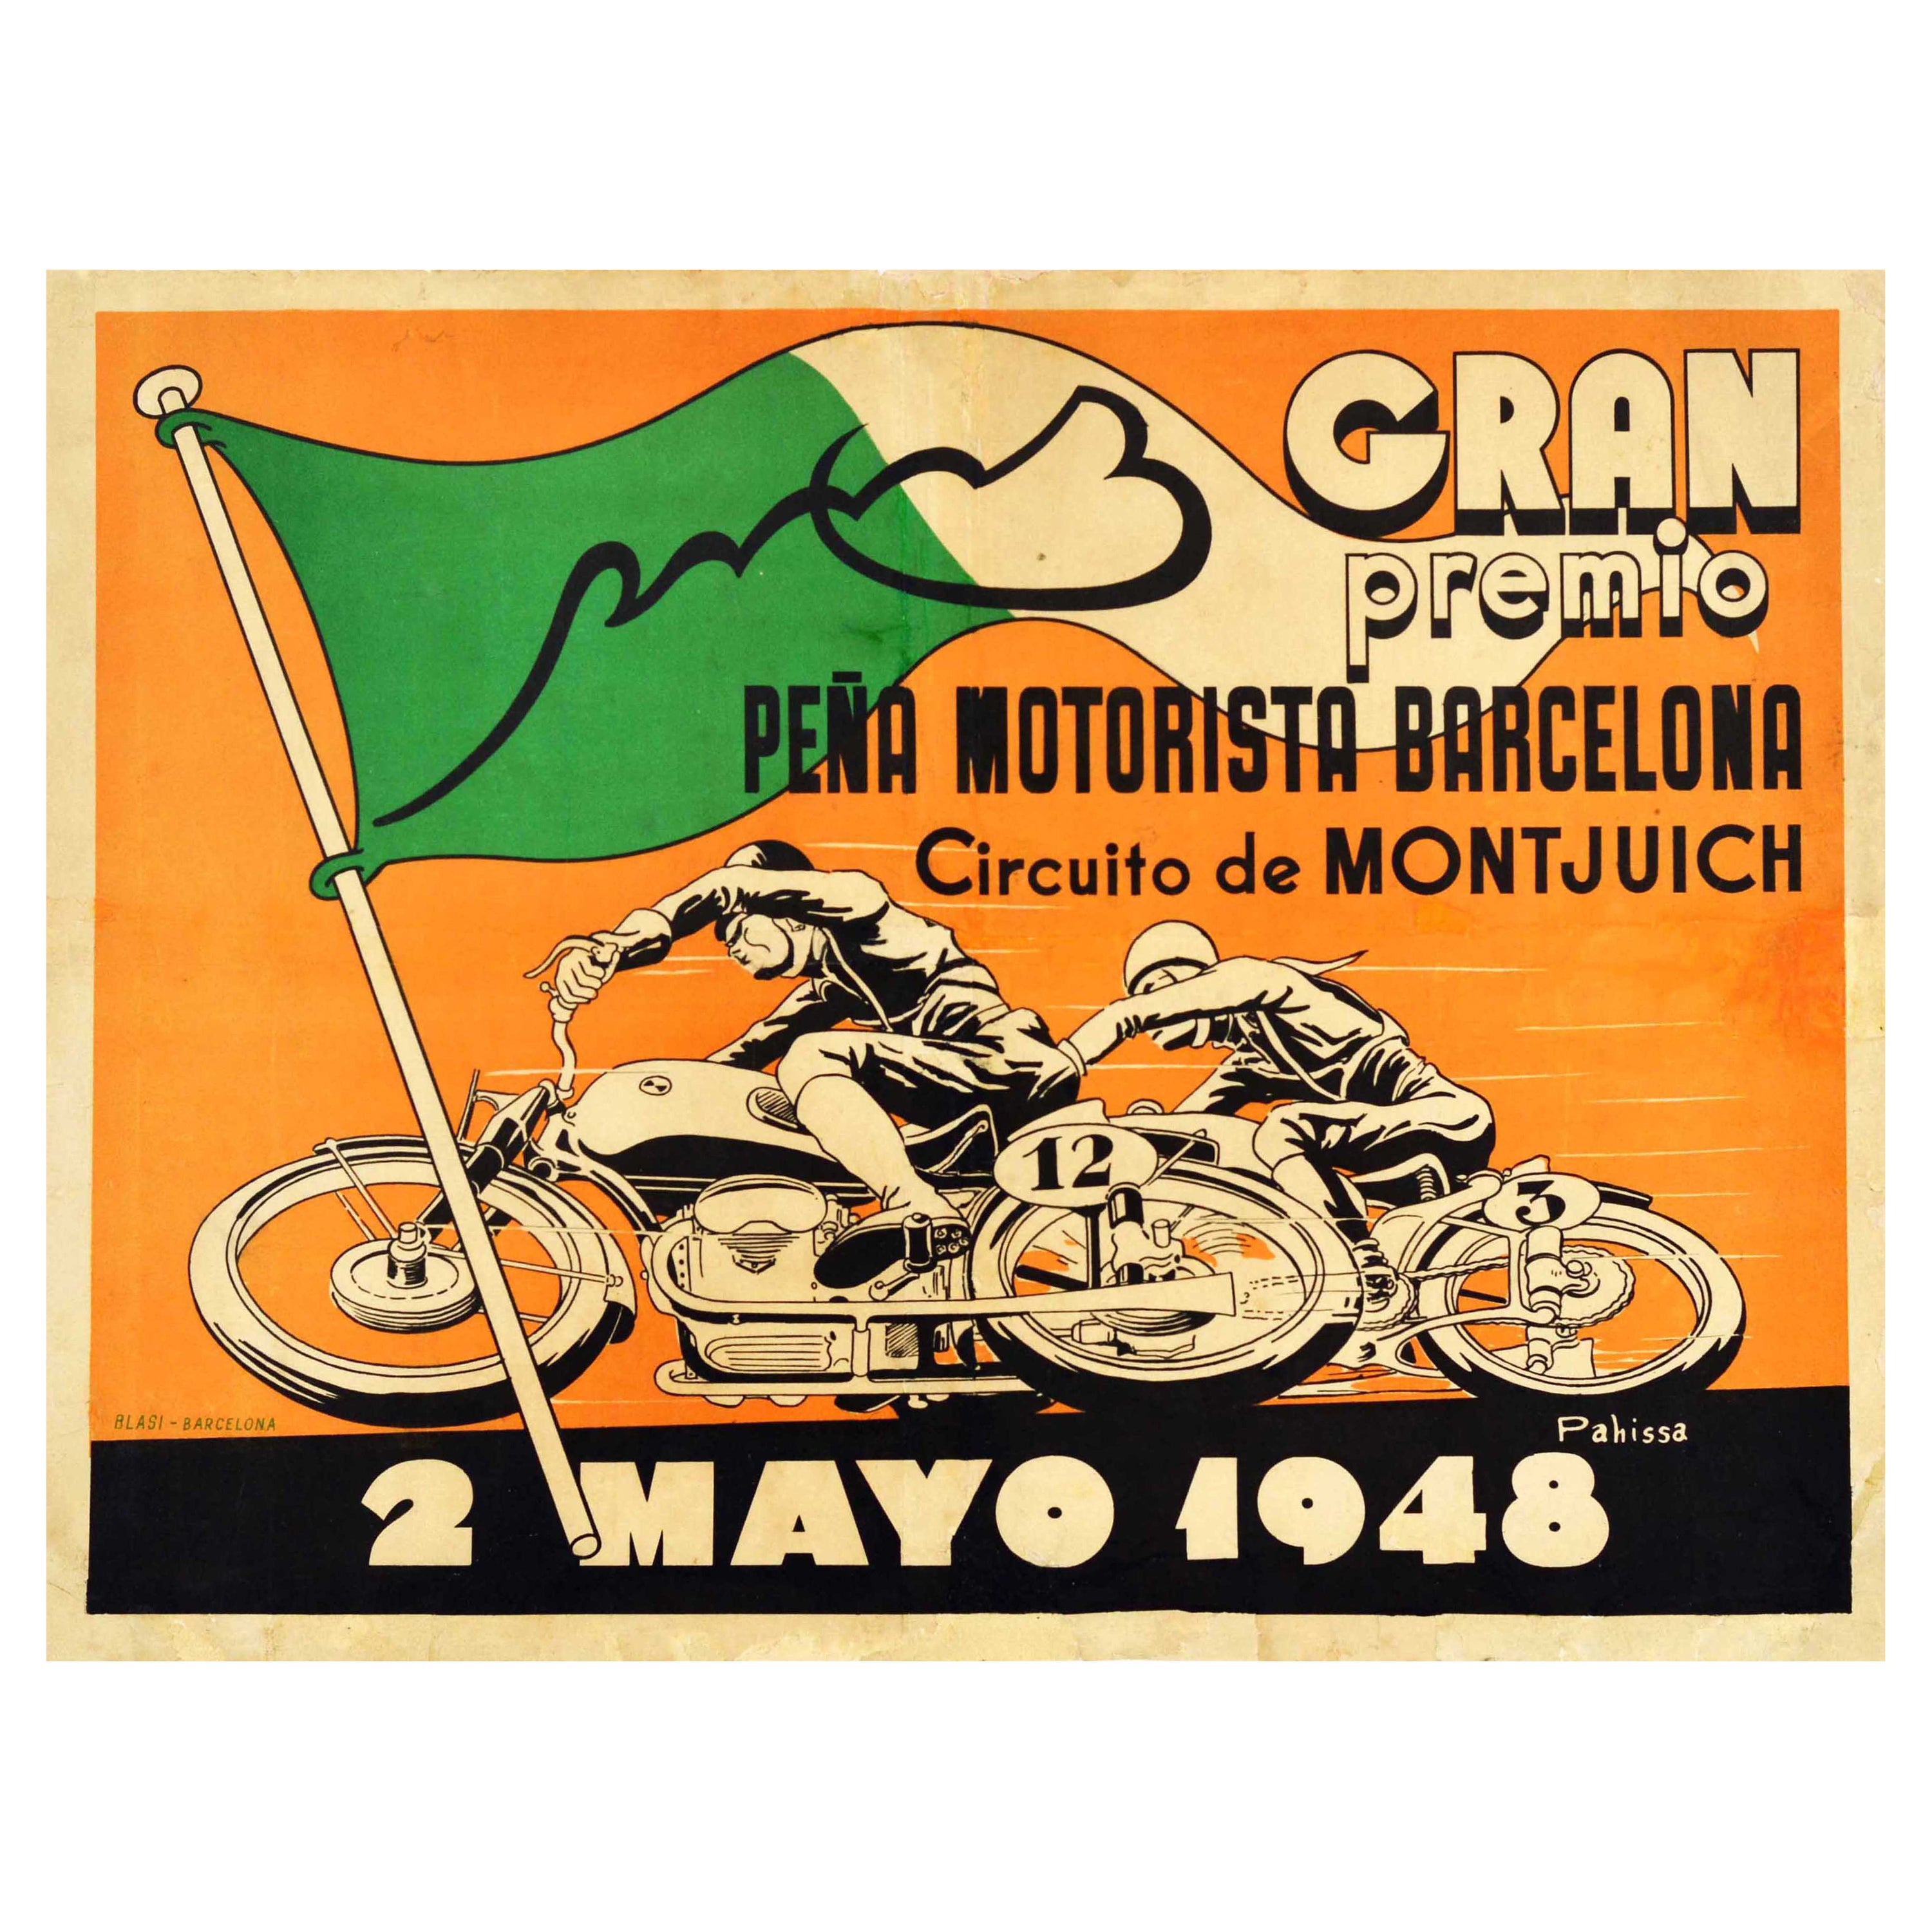 Original Vintage Motorsport Poster Gran Premio Pena Motorista Barcelona Montjuic For Sale